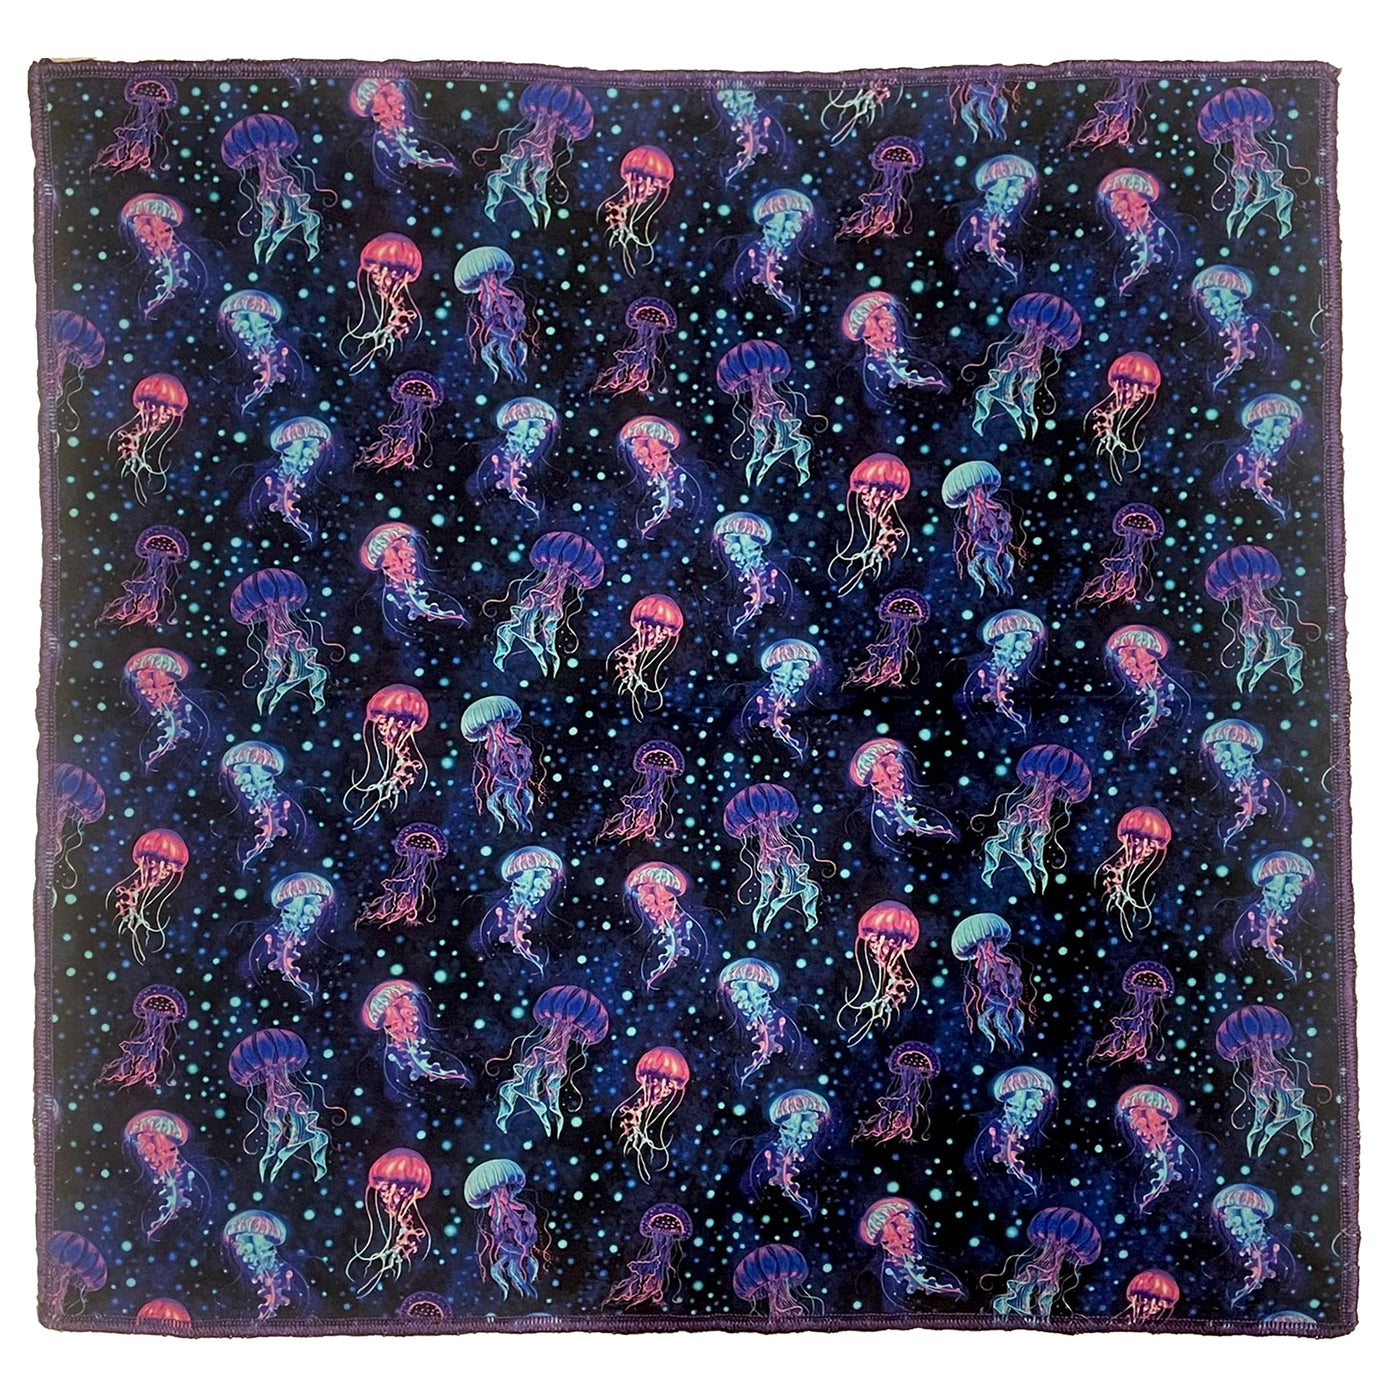 Jellyfish bandana in beautiful shades of blues, purples & aquas. handmade from 100% cotton